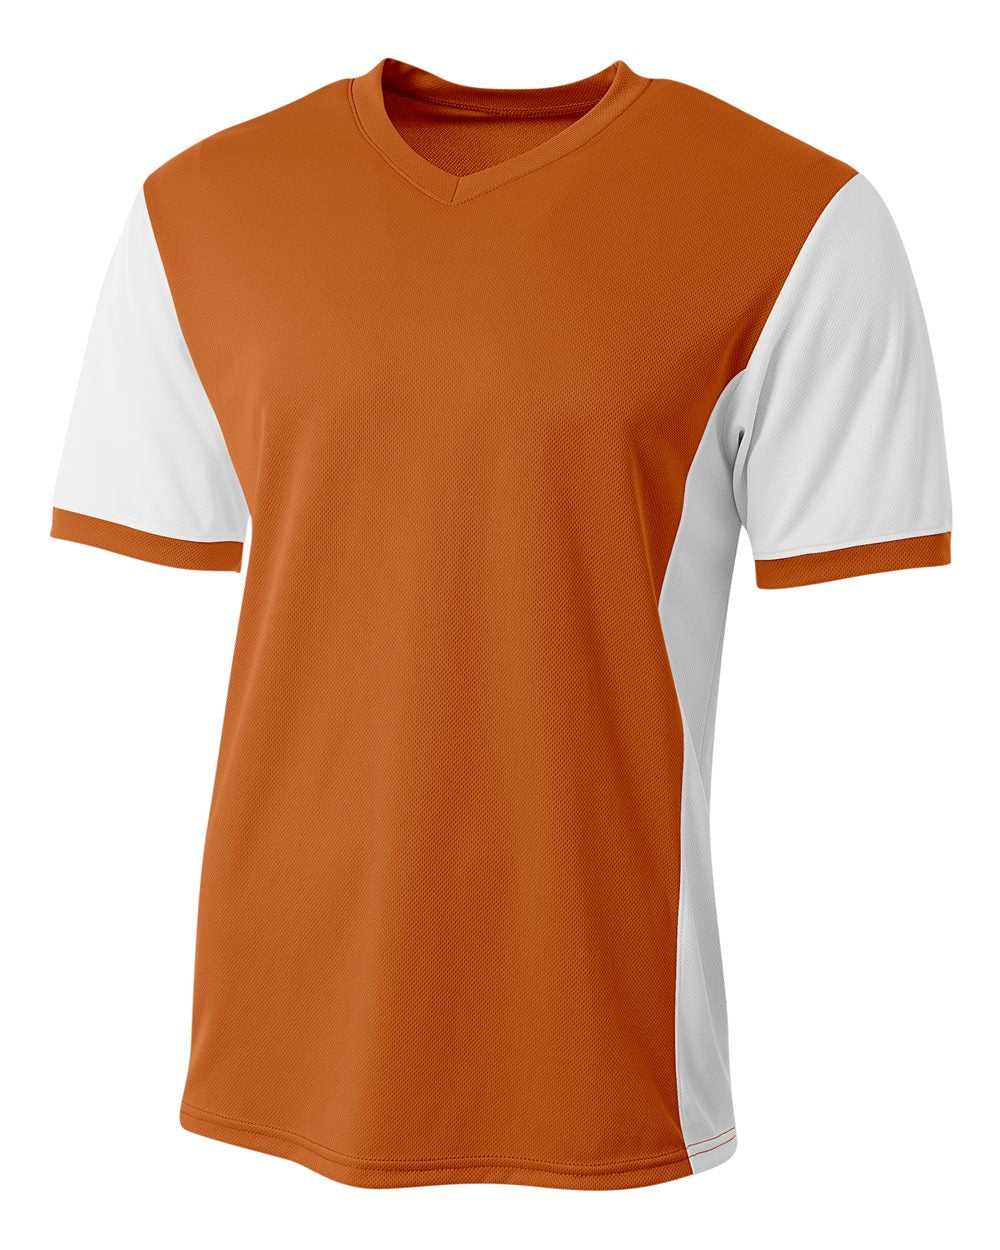 A4 NB3017 Premier Soccer Jersey - Orange White - HIT a Double